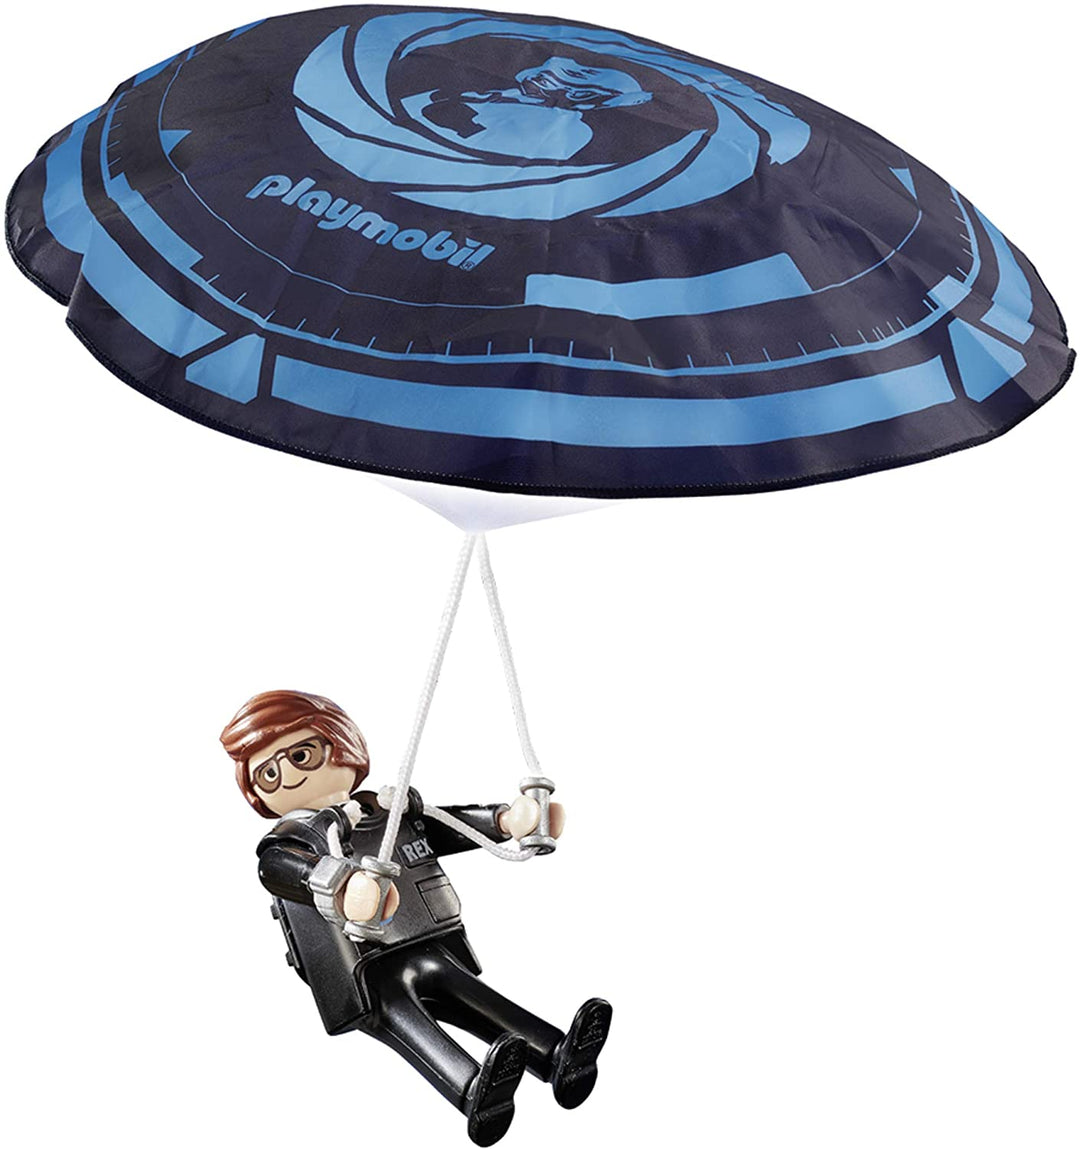 Playmobil The Movie 70070 Rex Dasher avec parachute